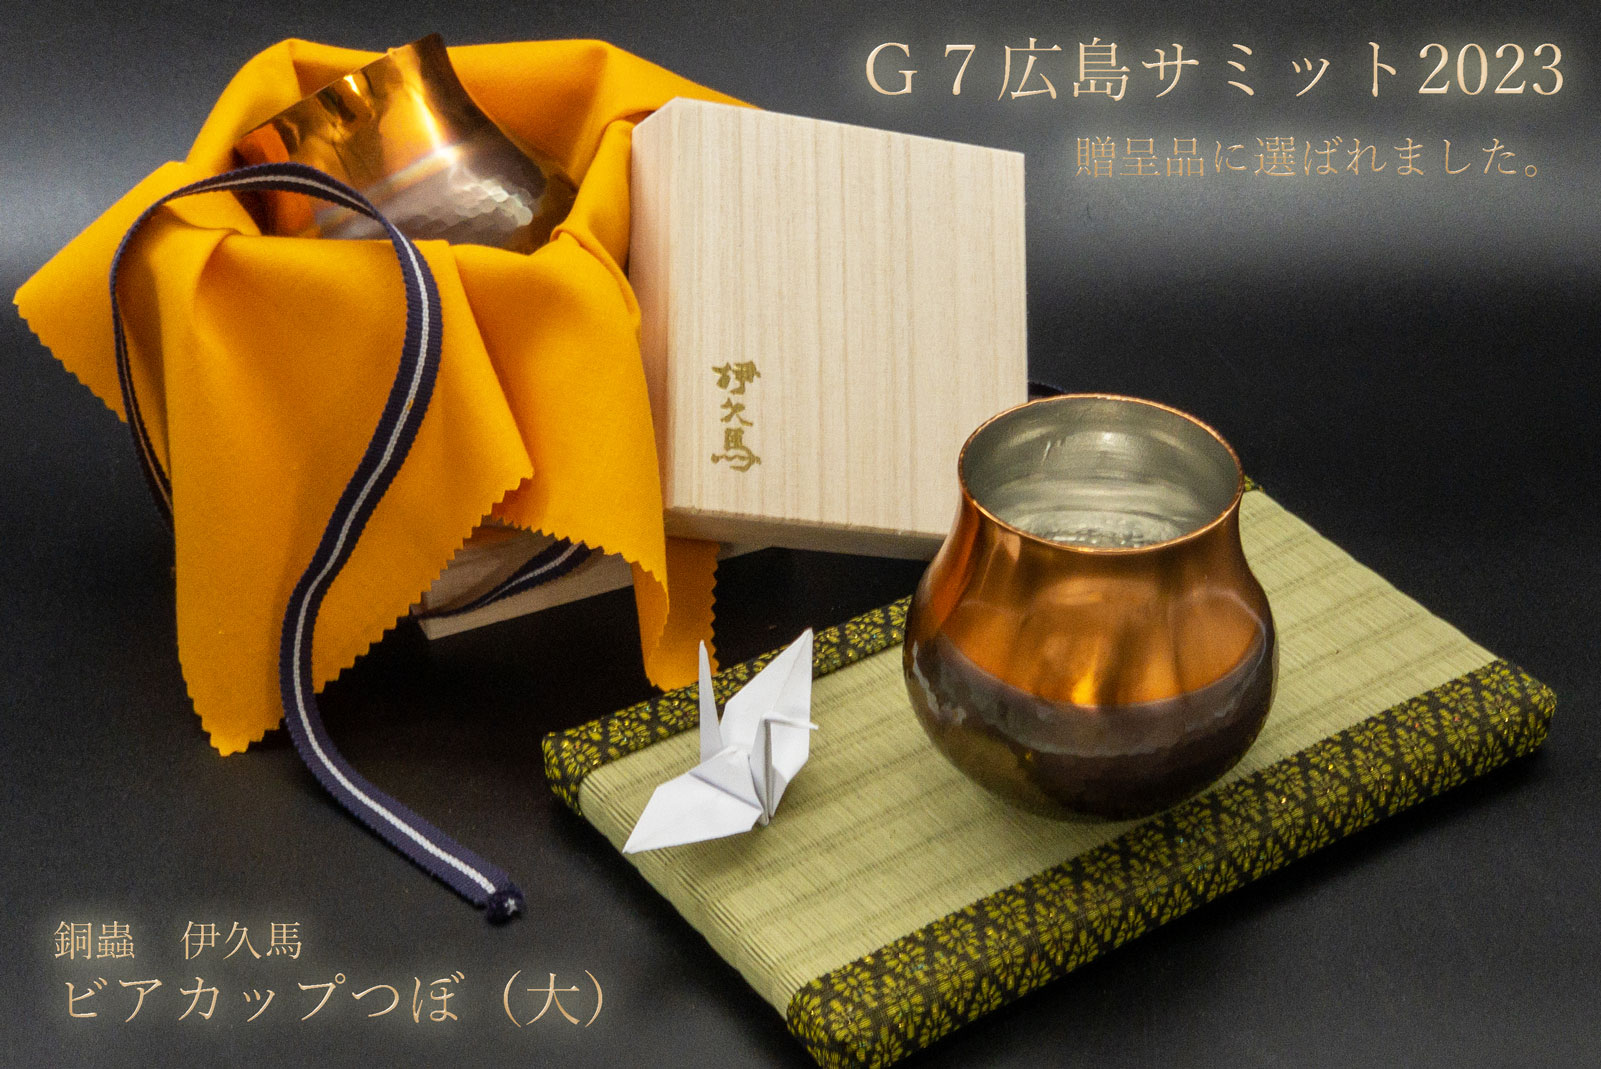 G7広島サミットの贈呈品に【伊久馬 ビアカップつぼ（大）】が選ばれました。